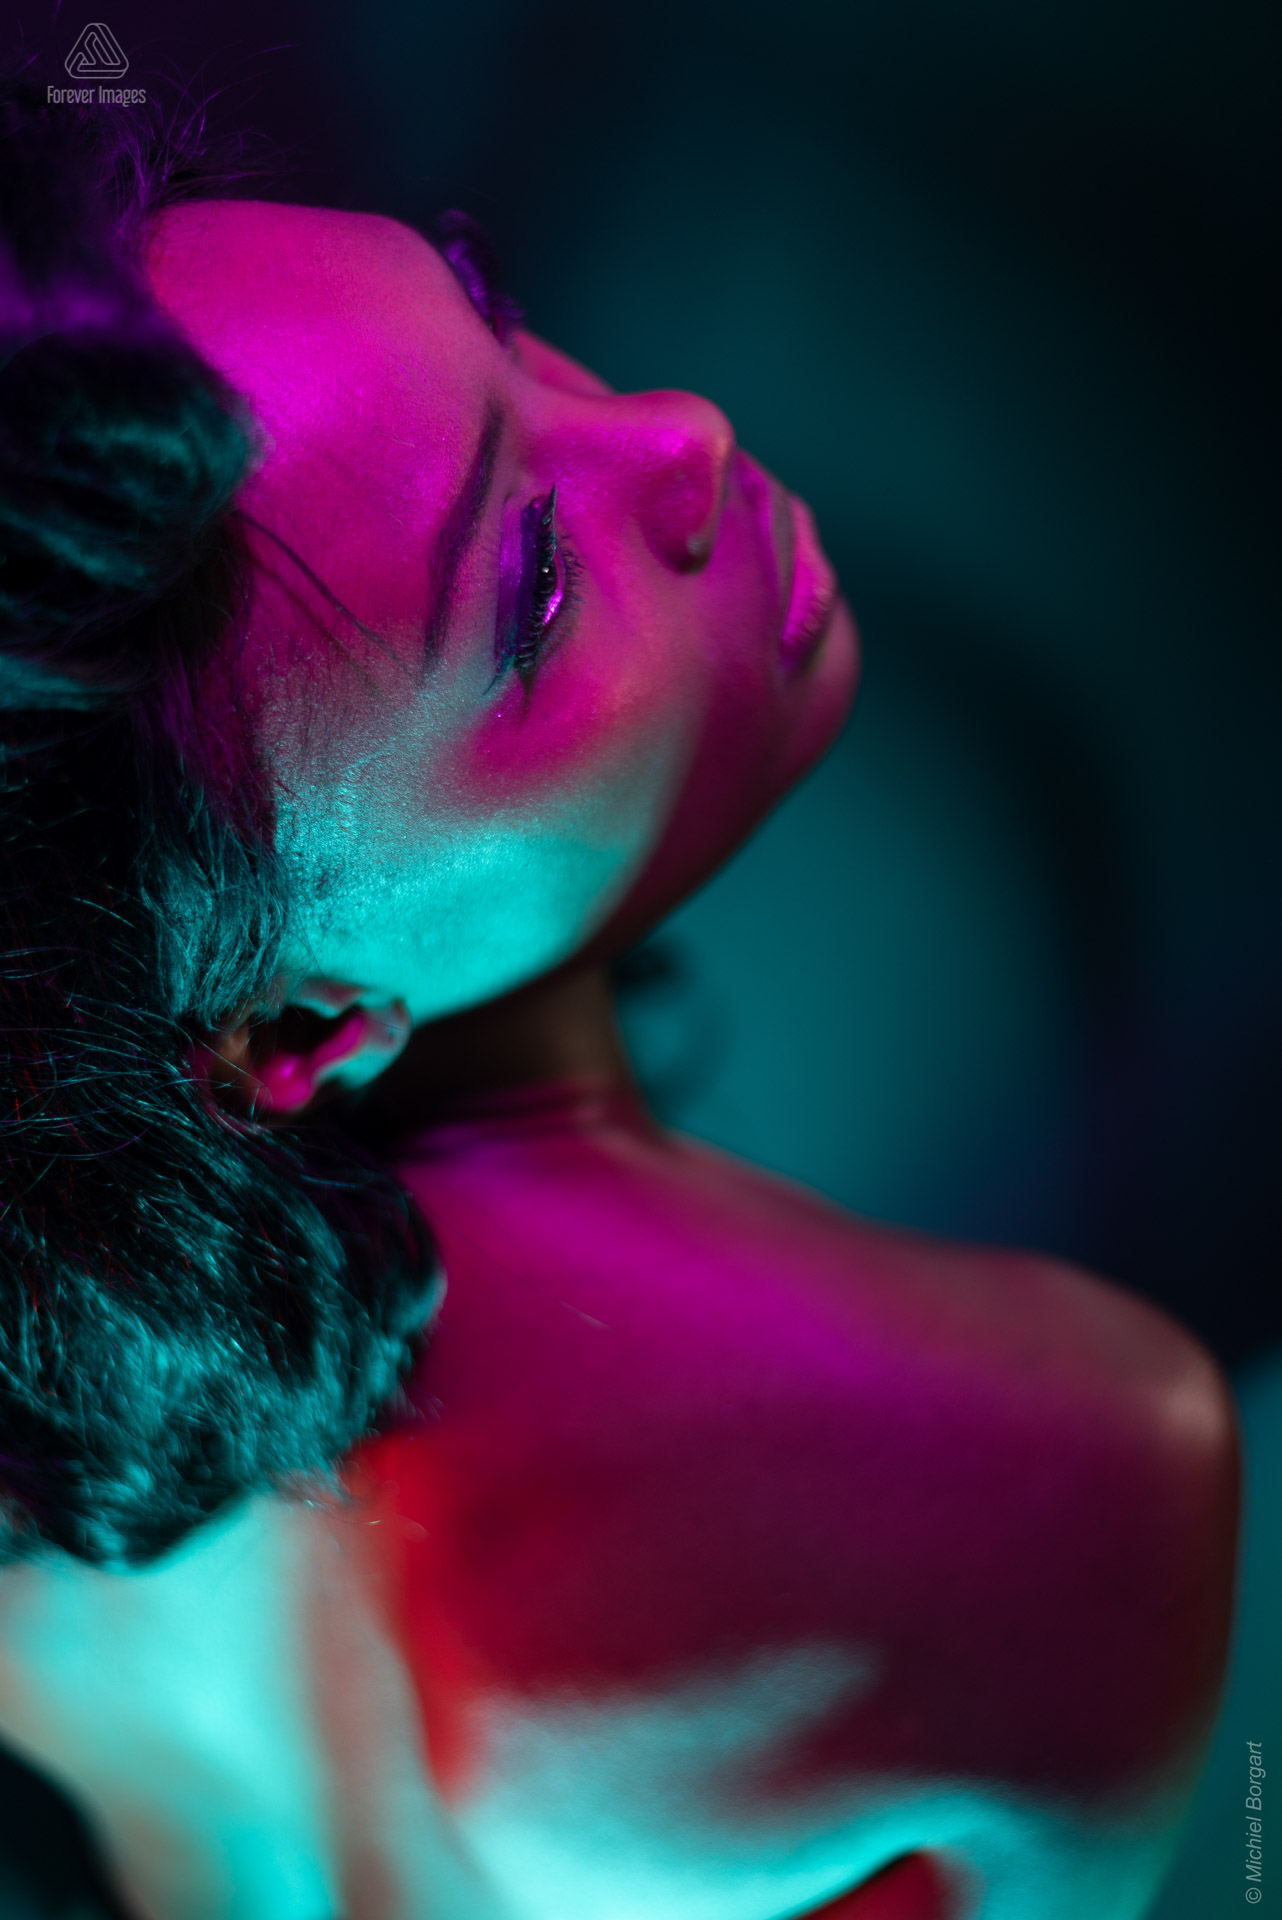 Portretfoto model paars rood groen licht achter omhoog kijken low key | Mariana Pietersz Miss Avantgarde | Portretfotograaf Michiel Borgart - Forever Images.